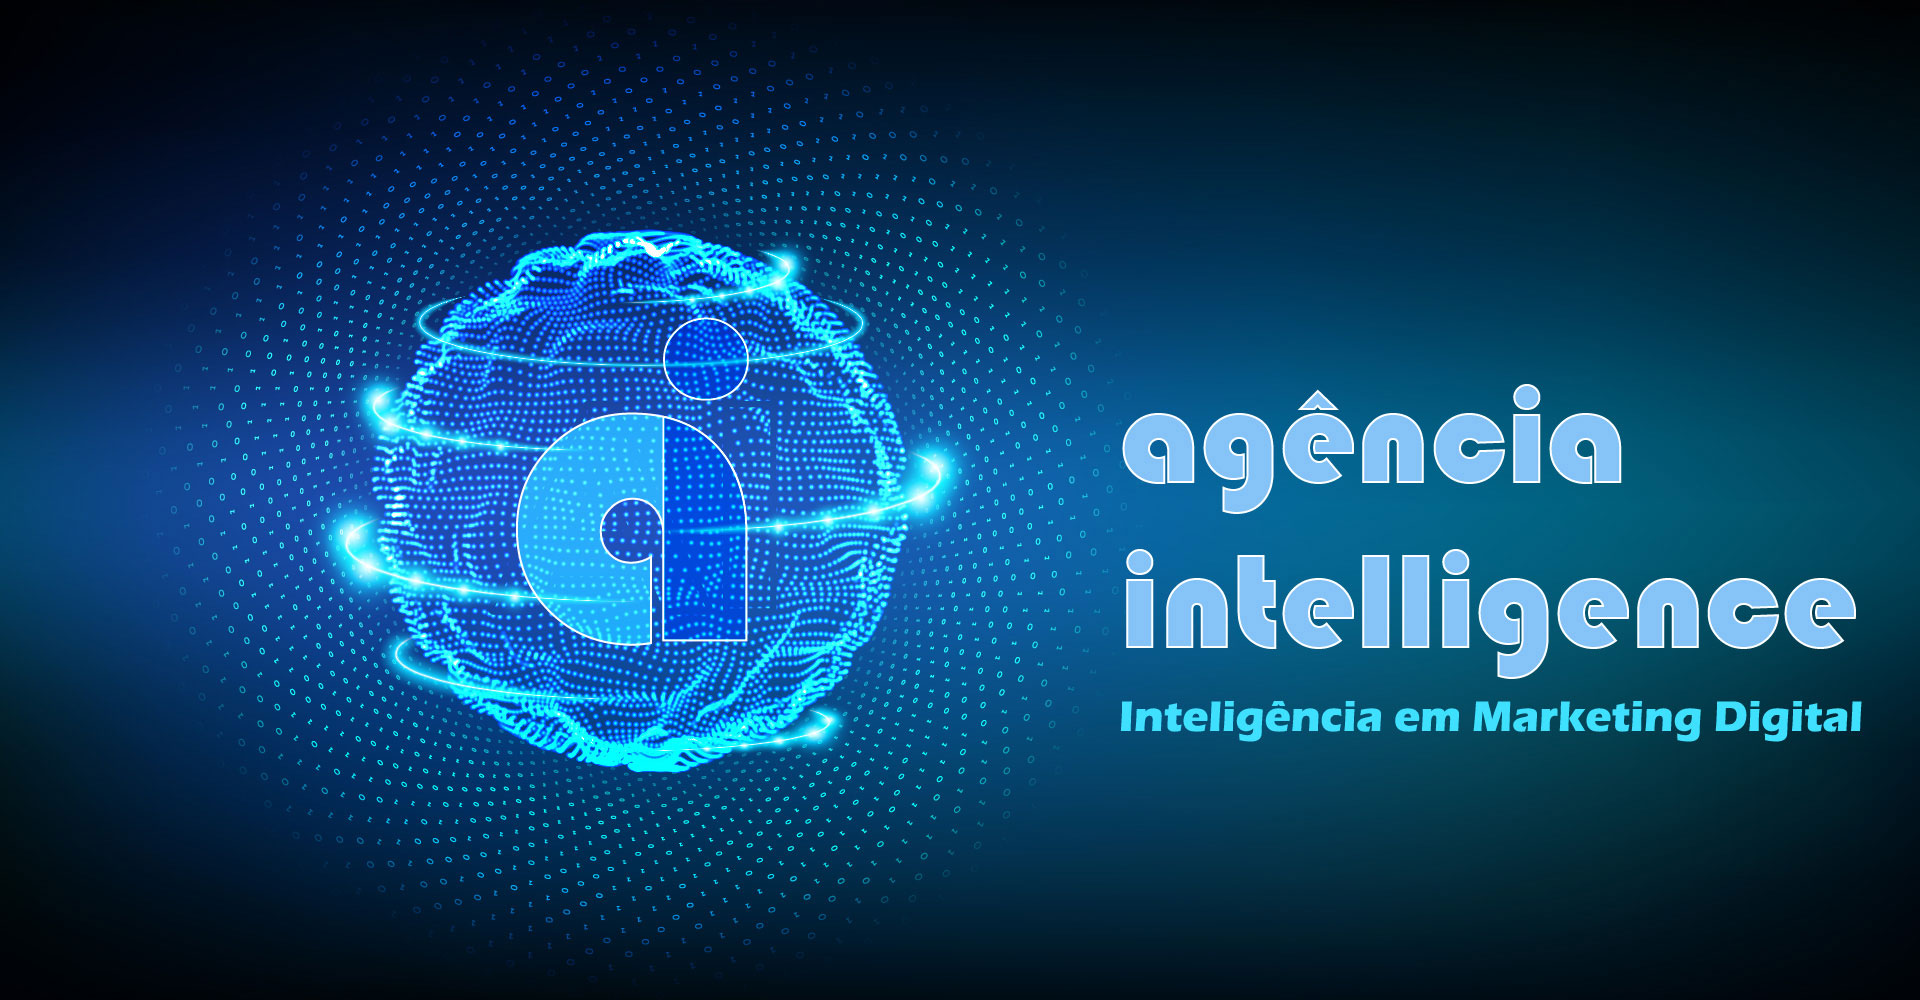 Agência Intelligence - Marketing Digital Inteligente